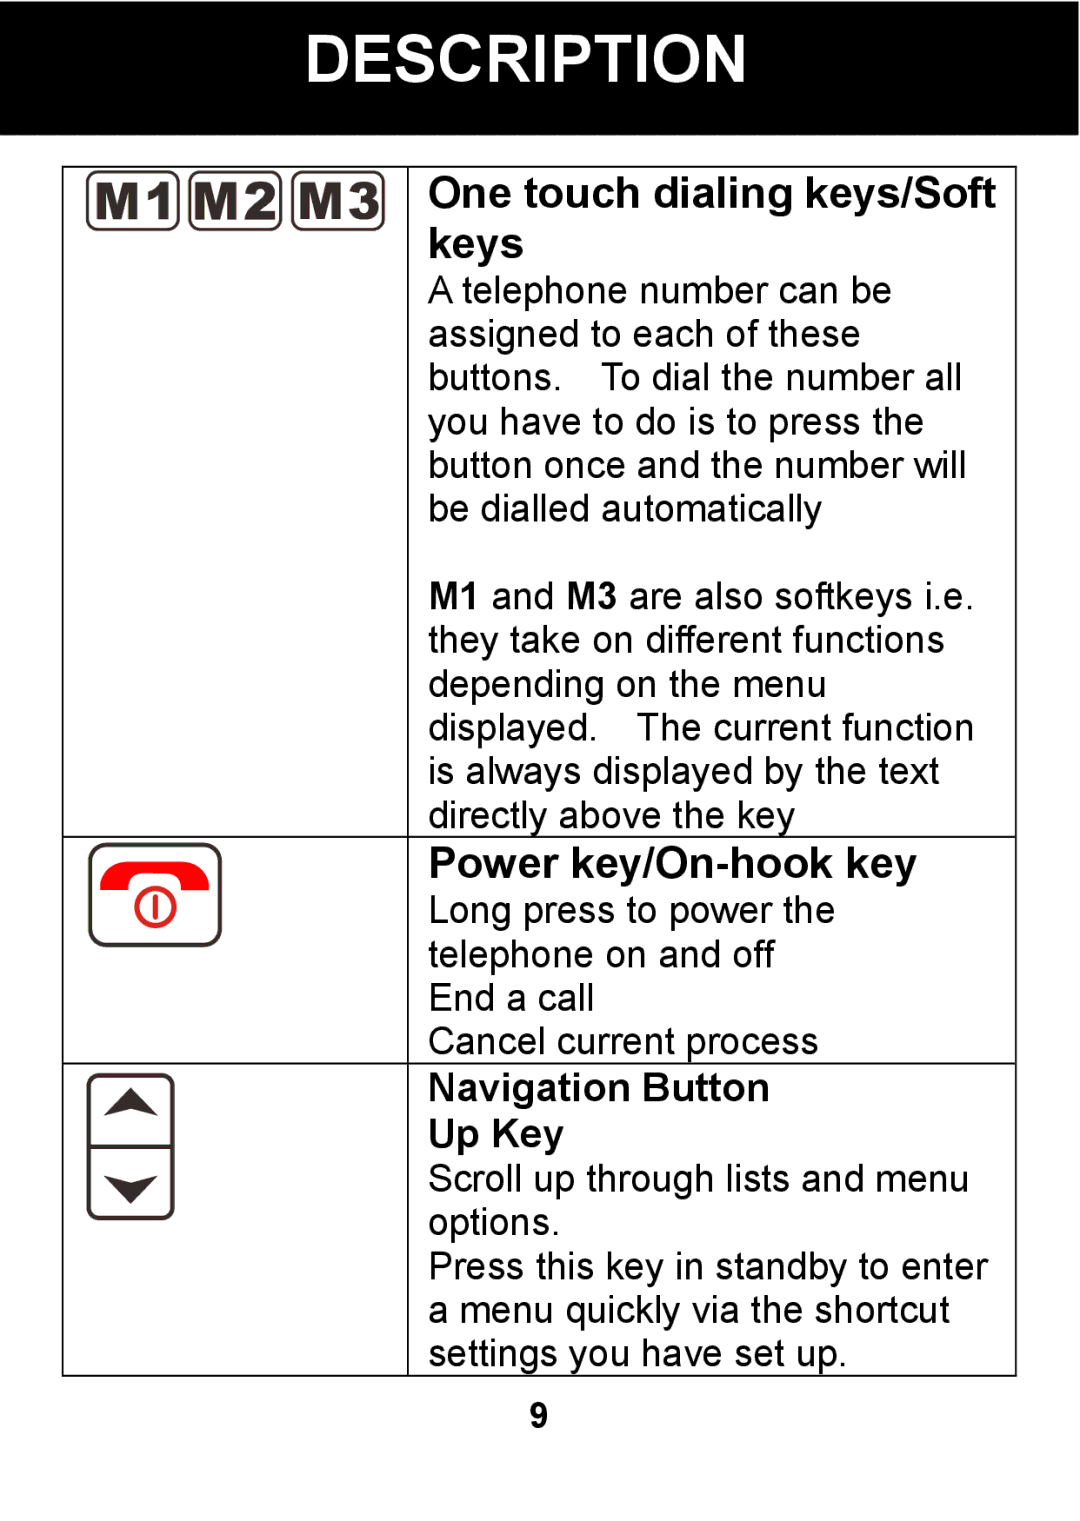 Pal/Pax PAL101 manual One touch dialing keys/Soft keys, Navigation Button Up Key 